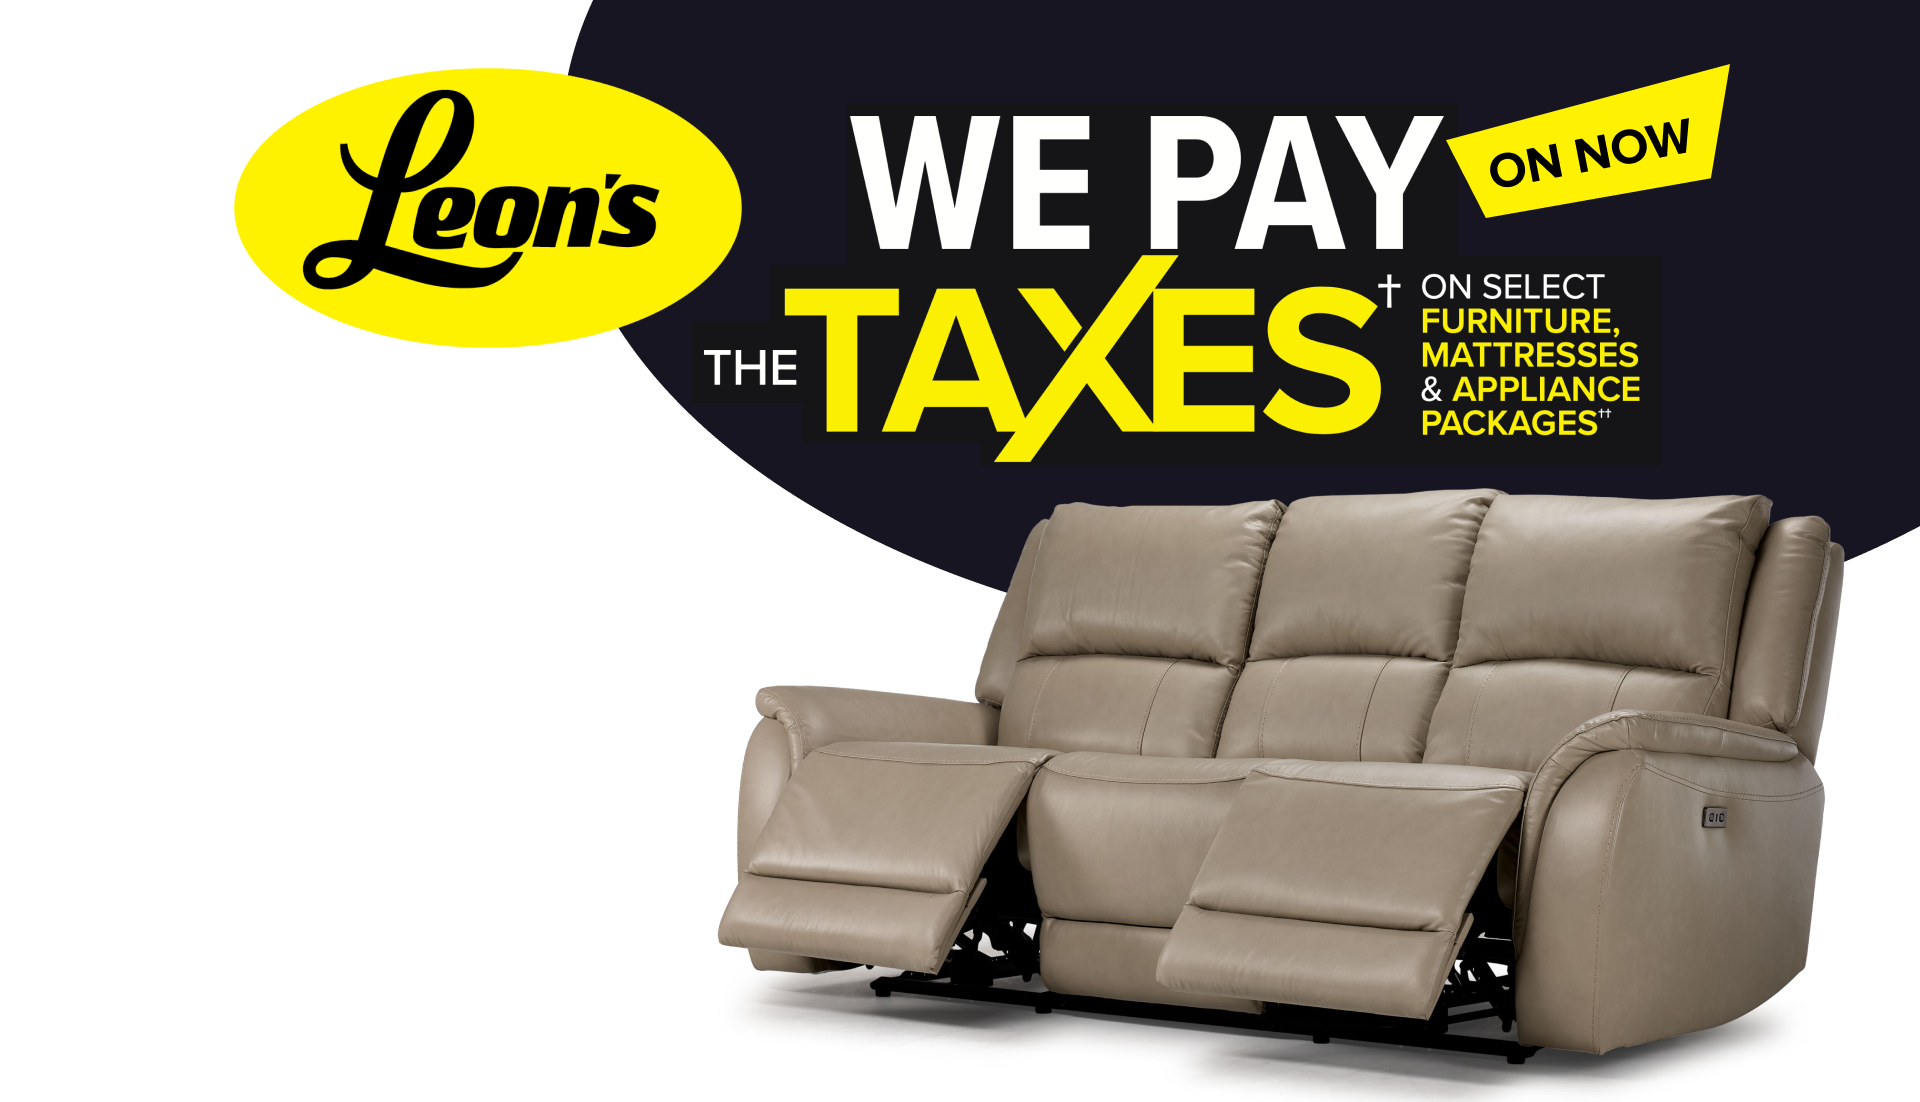 Leon's Furniture Save the Tax